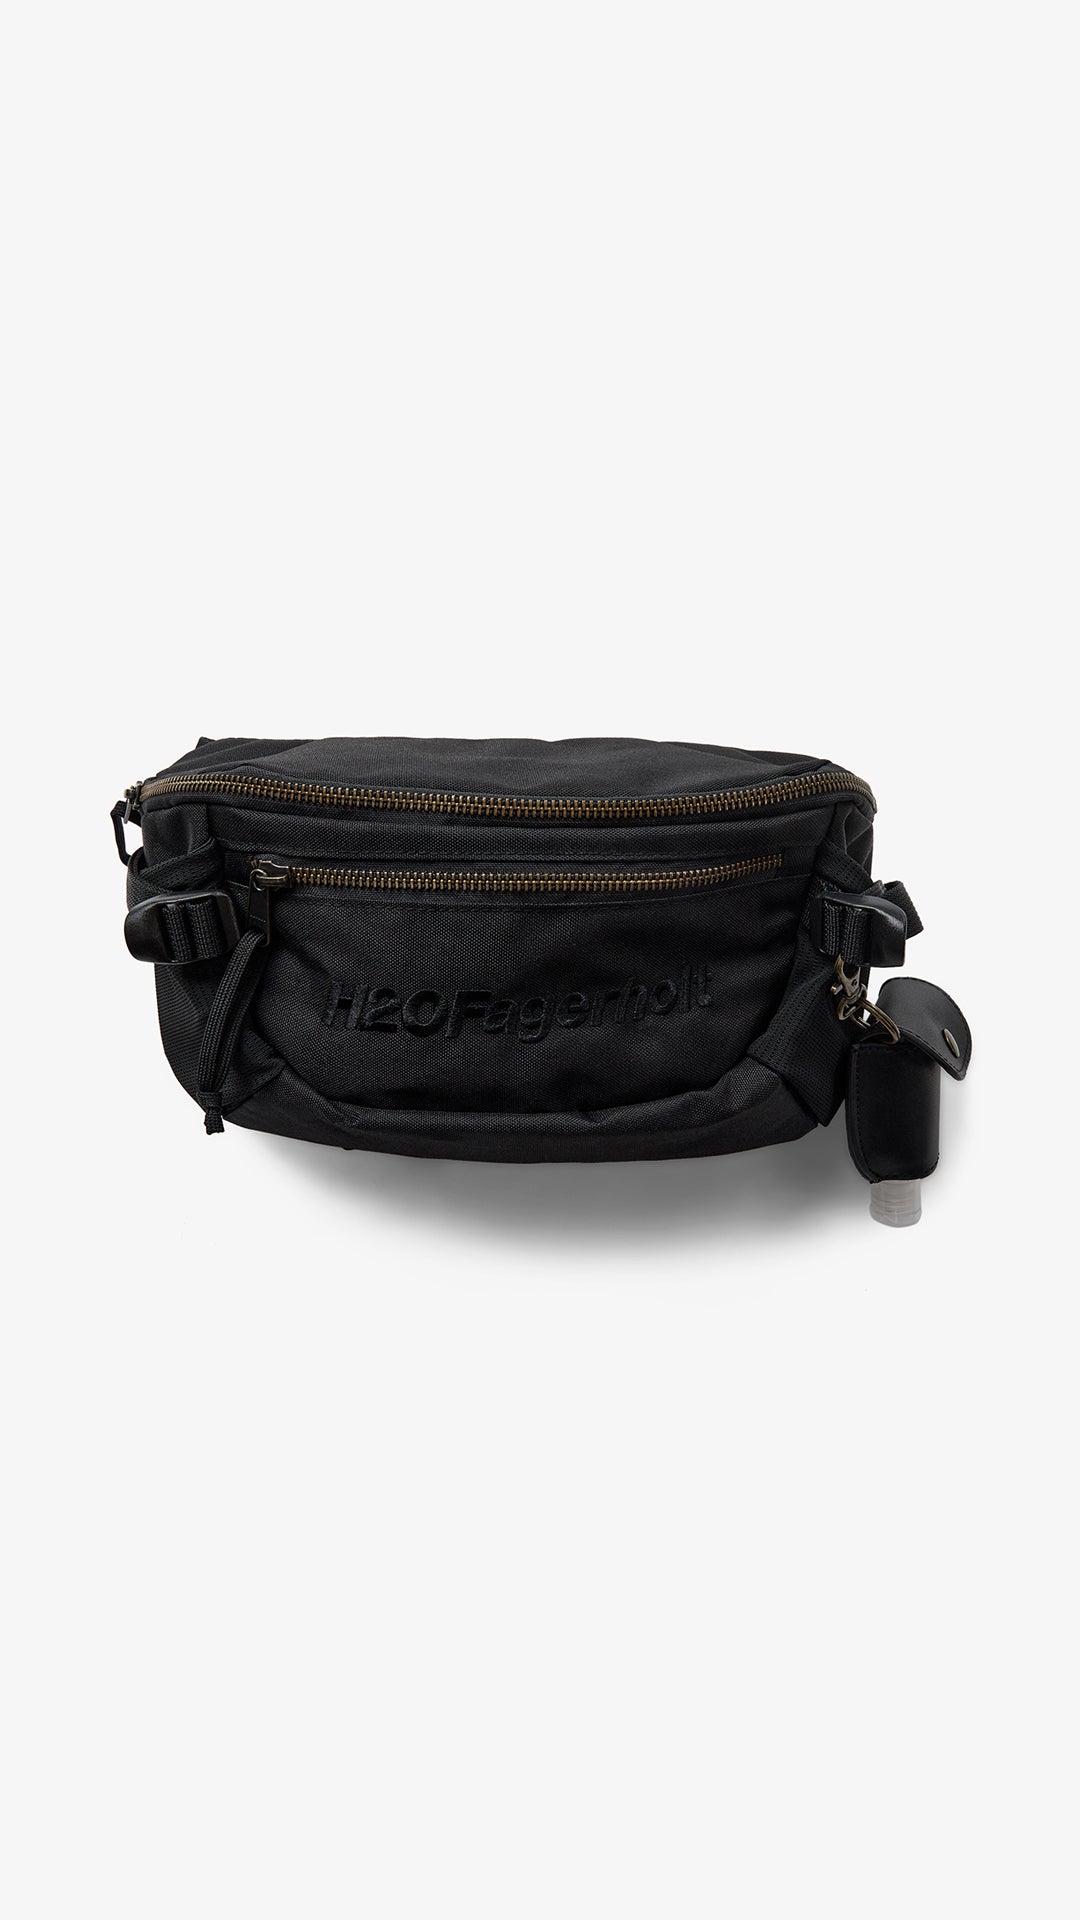 H2OFagerholt Lisa Bag Bag 3501 Deep Black